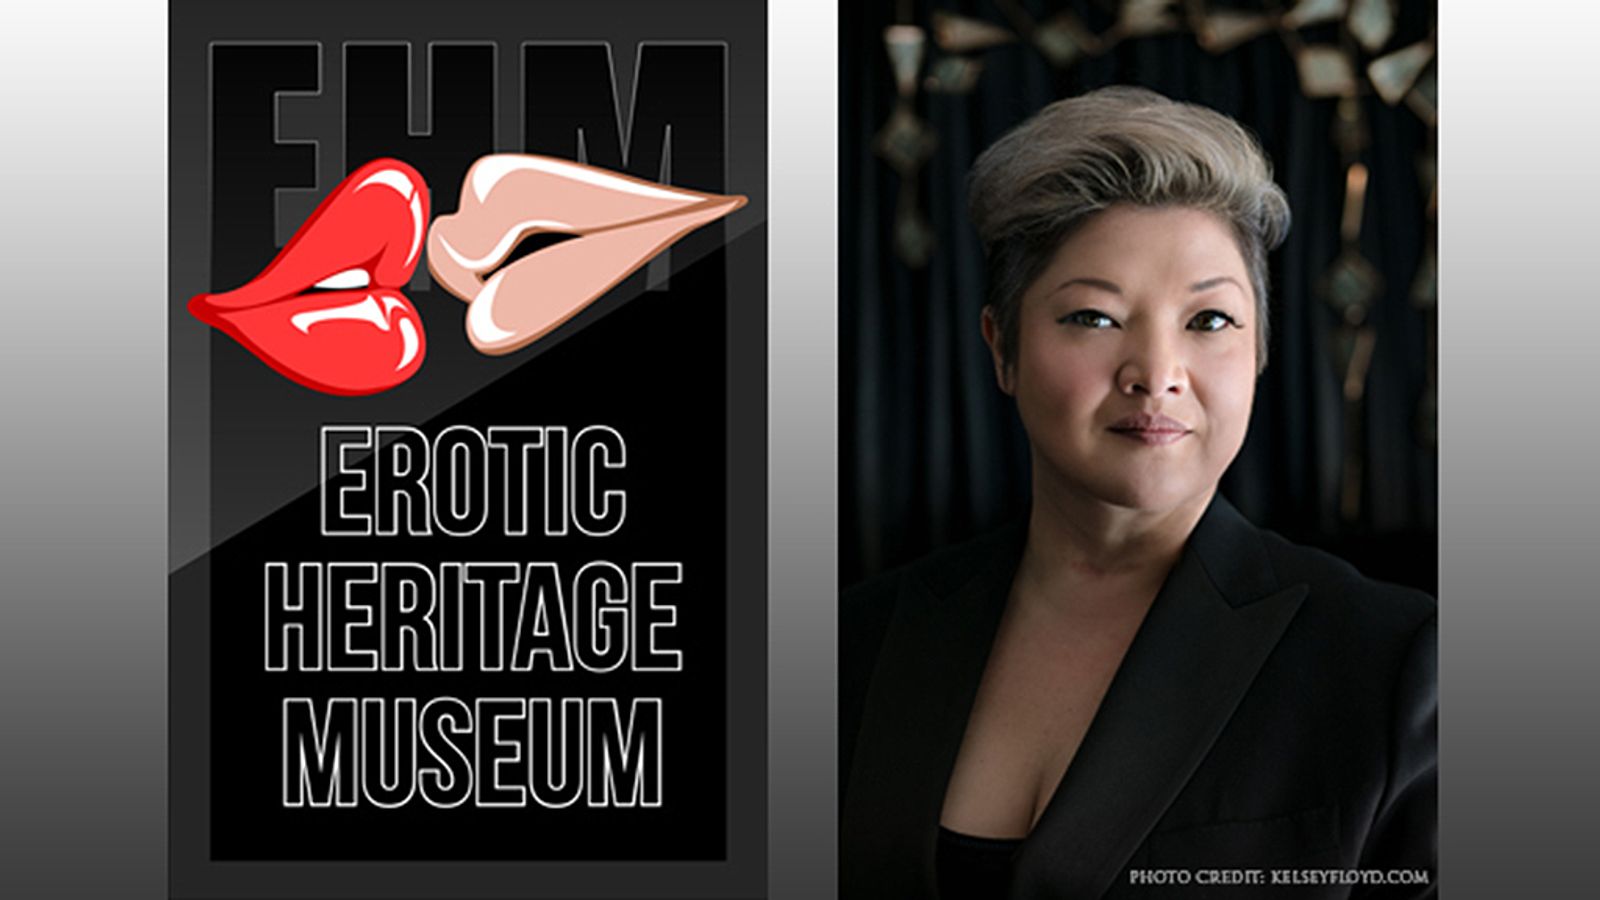 Kelly Shibari Is Erotic Heritage Museum's New Marketer